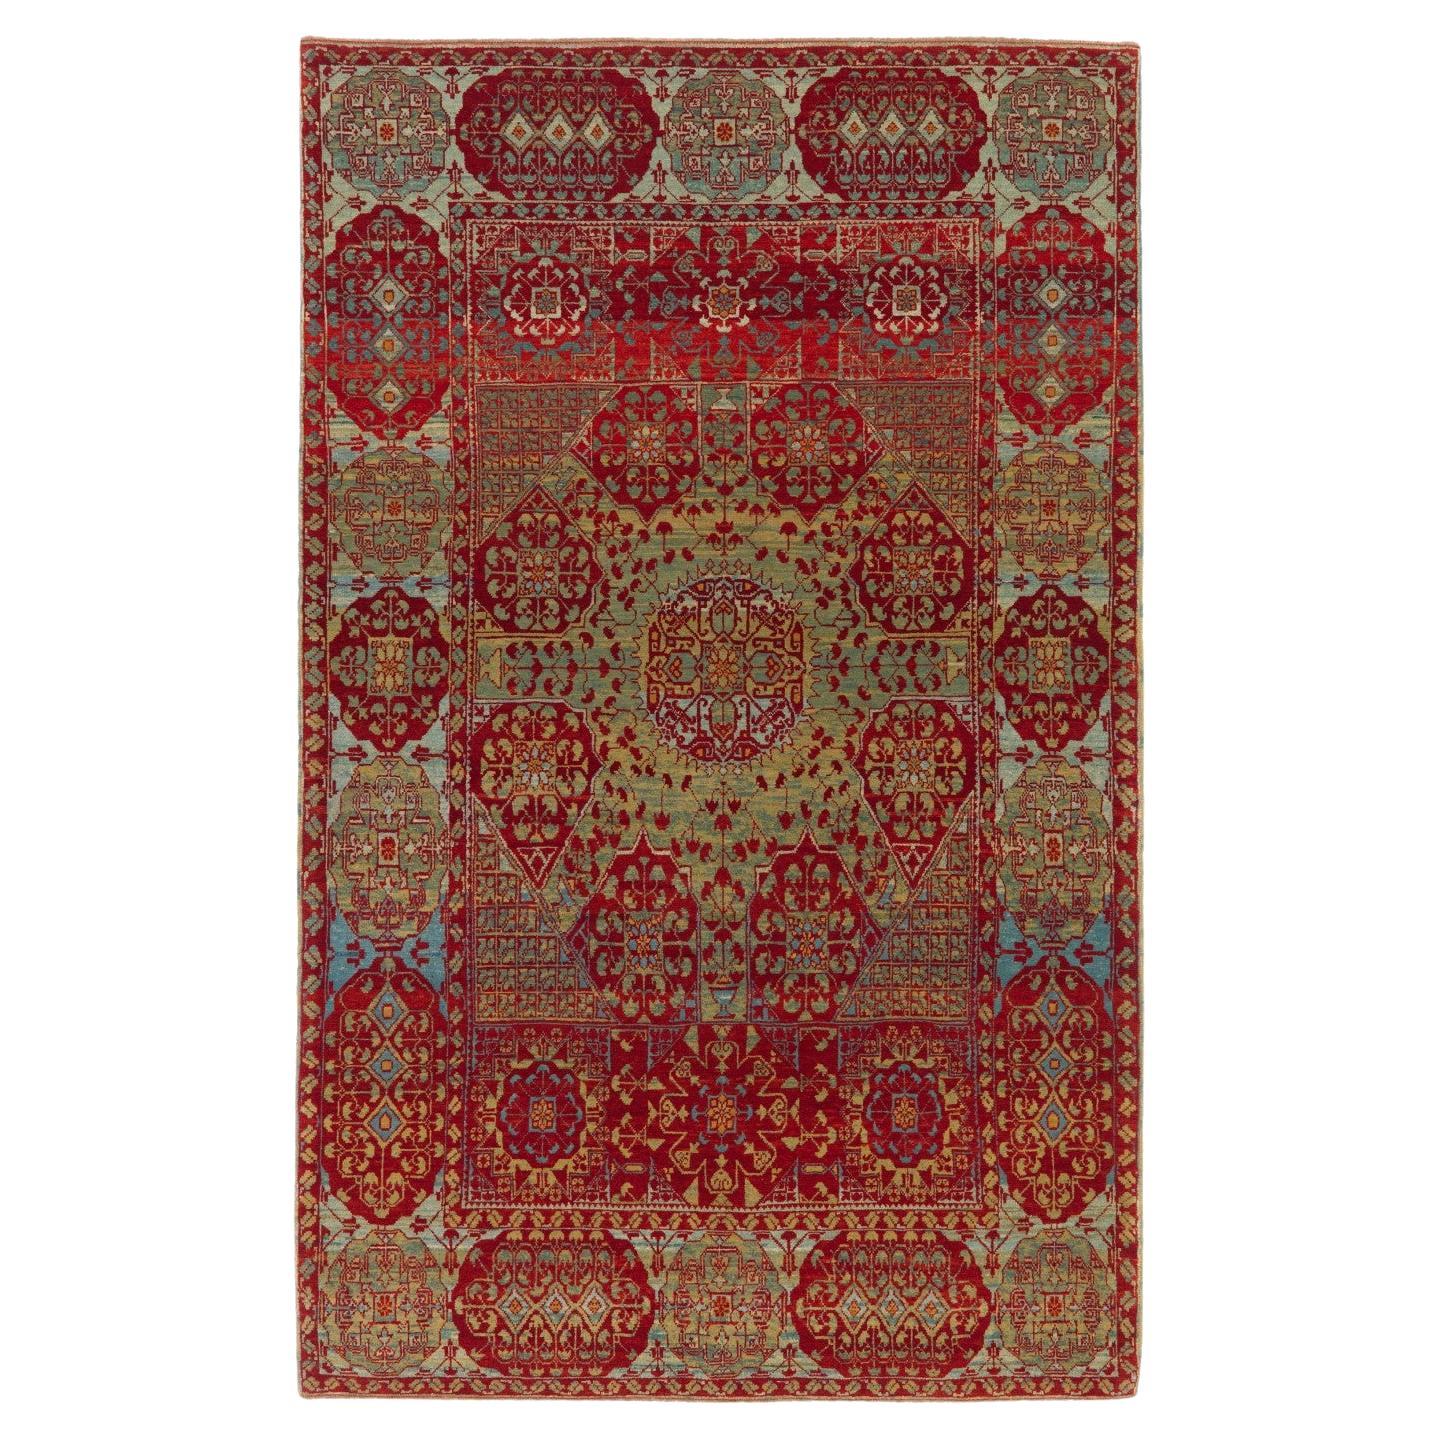 Ararat Rugs Tapis Mamluke avec motif de coupe, Antique Revival Rugs, Natural Dyed